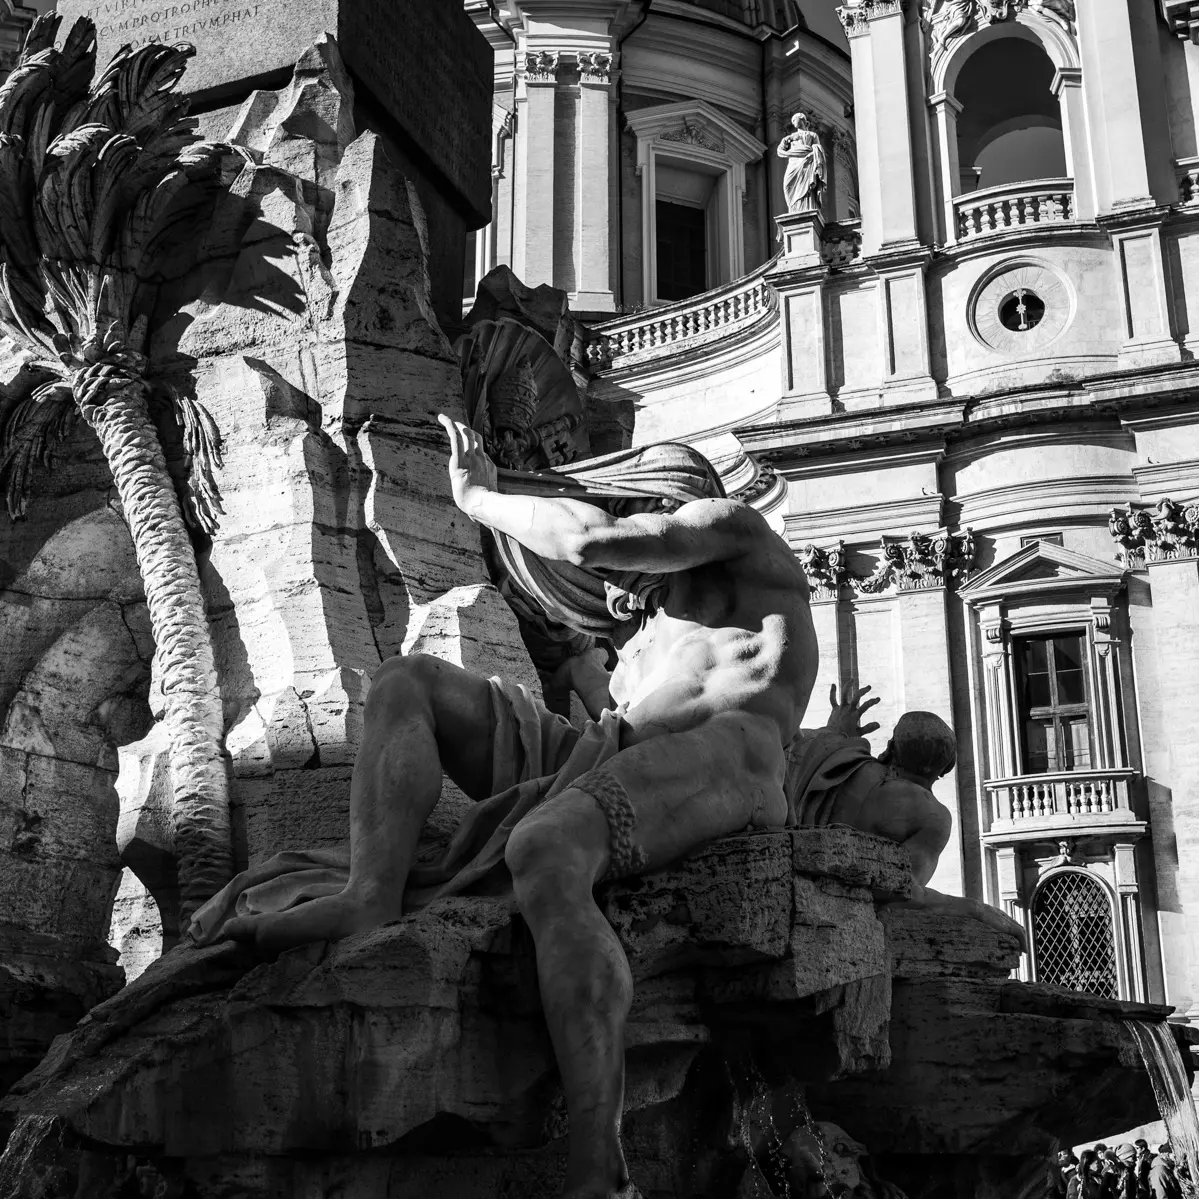 A digital photograph of Bernini's "Four Rivers" fountain in Piazza Navona in Roma, Italia.